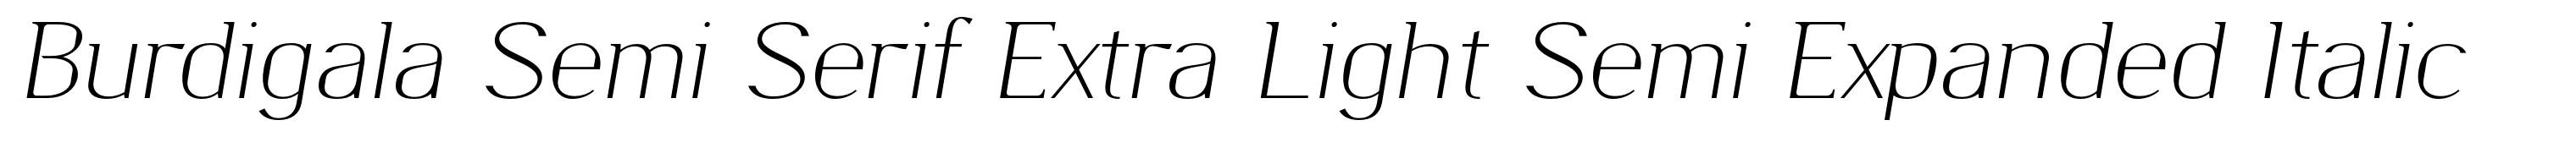 Burdigala Semi Serif Extra Light Semi Expanded Italic